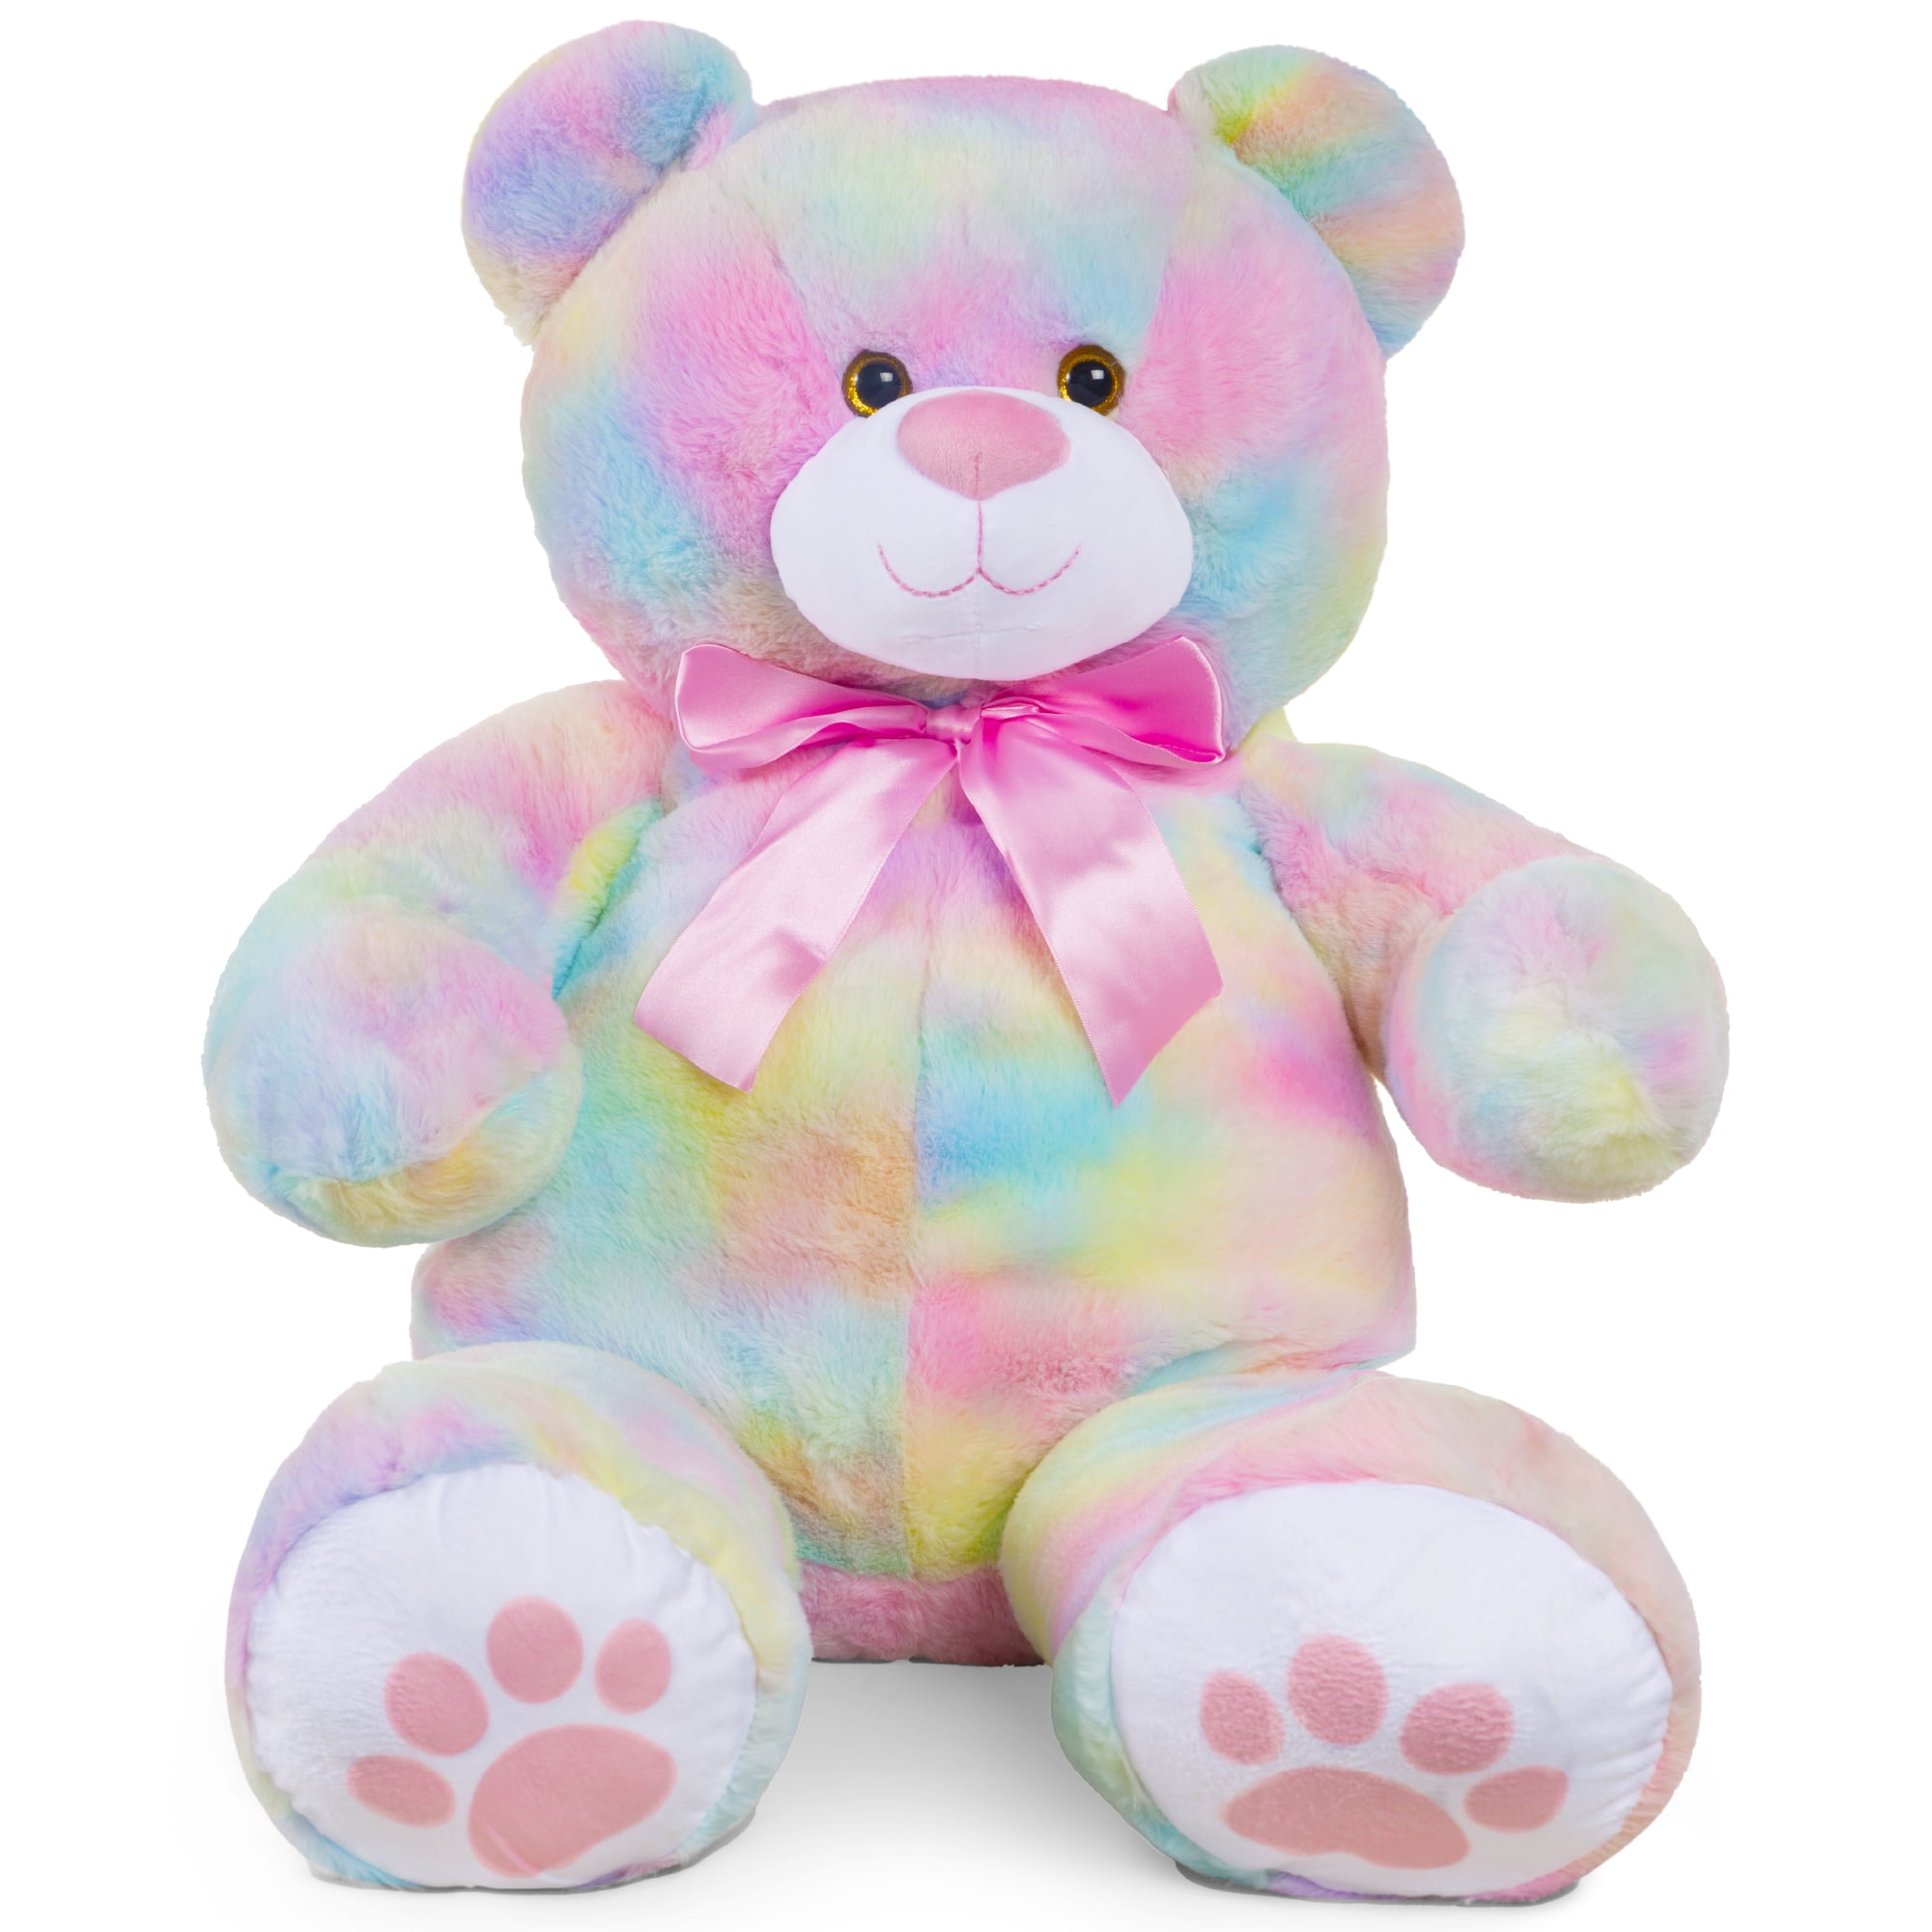 LARGE Star Glow Up Stuffed Teddy Bear Luminous Light up Cushion Plush Pastel 